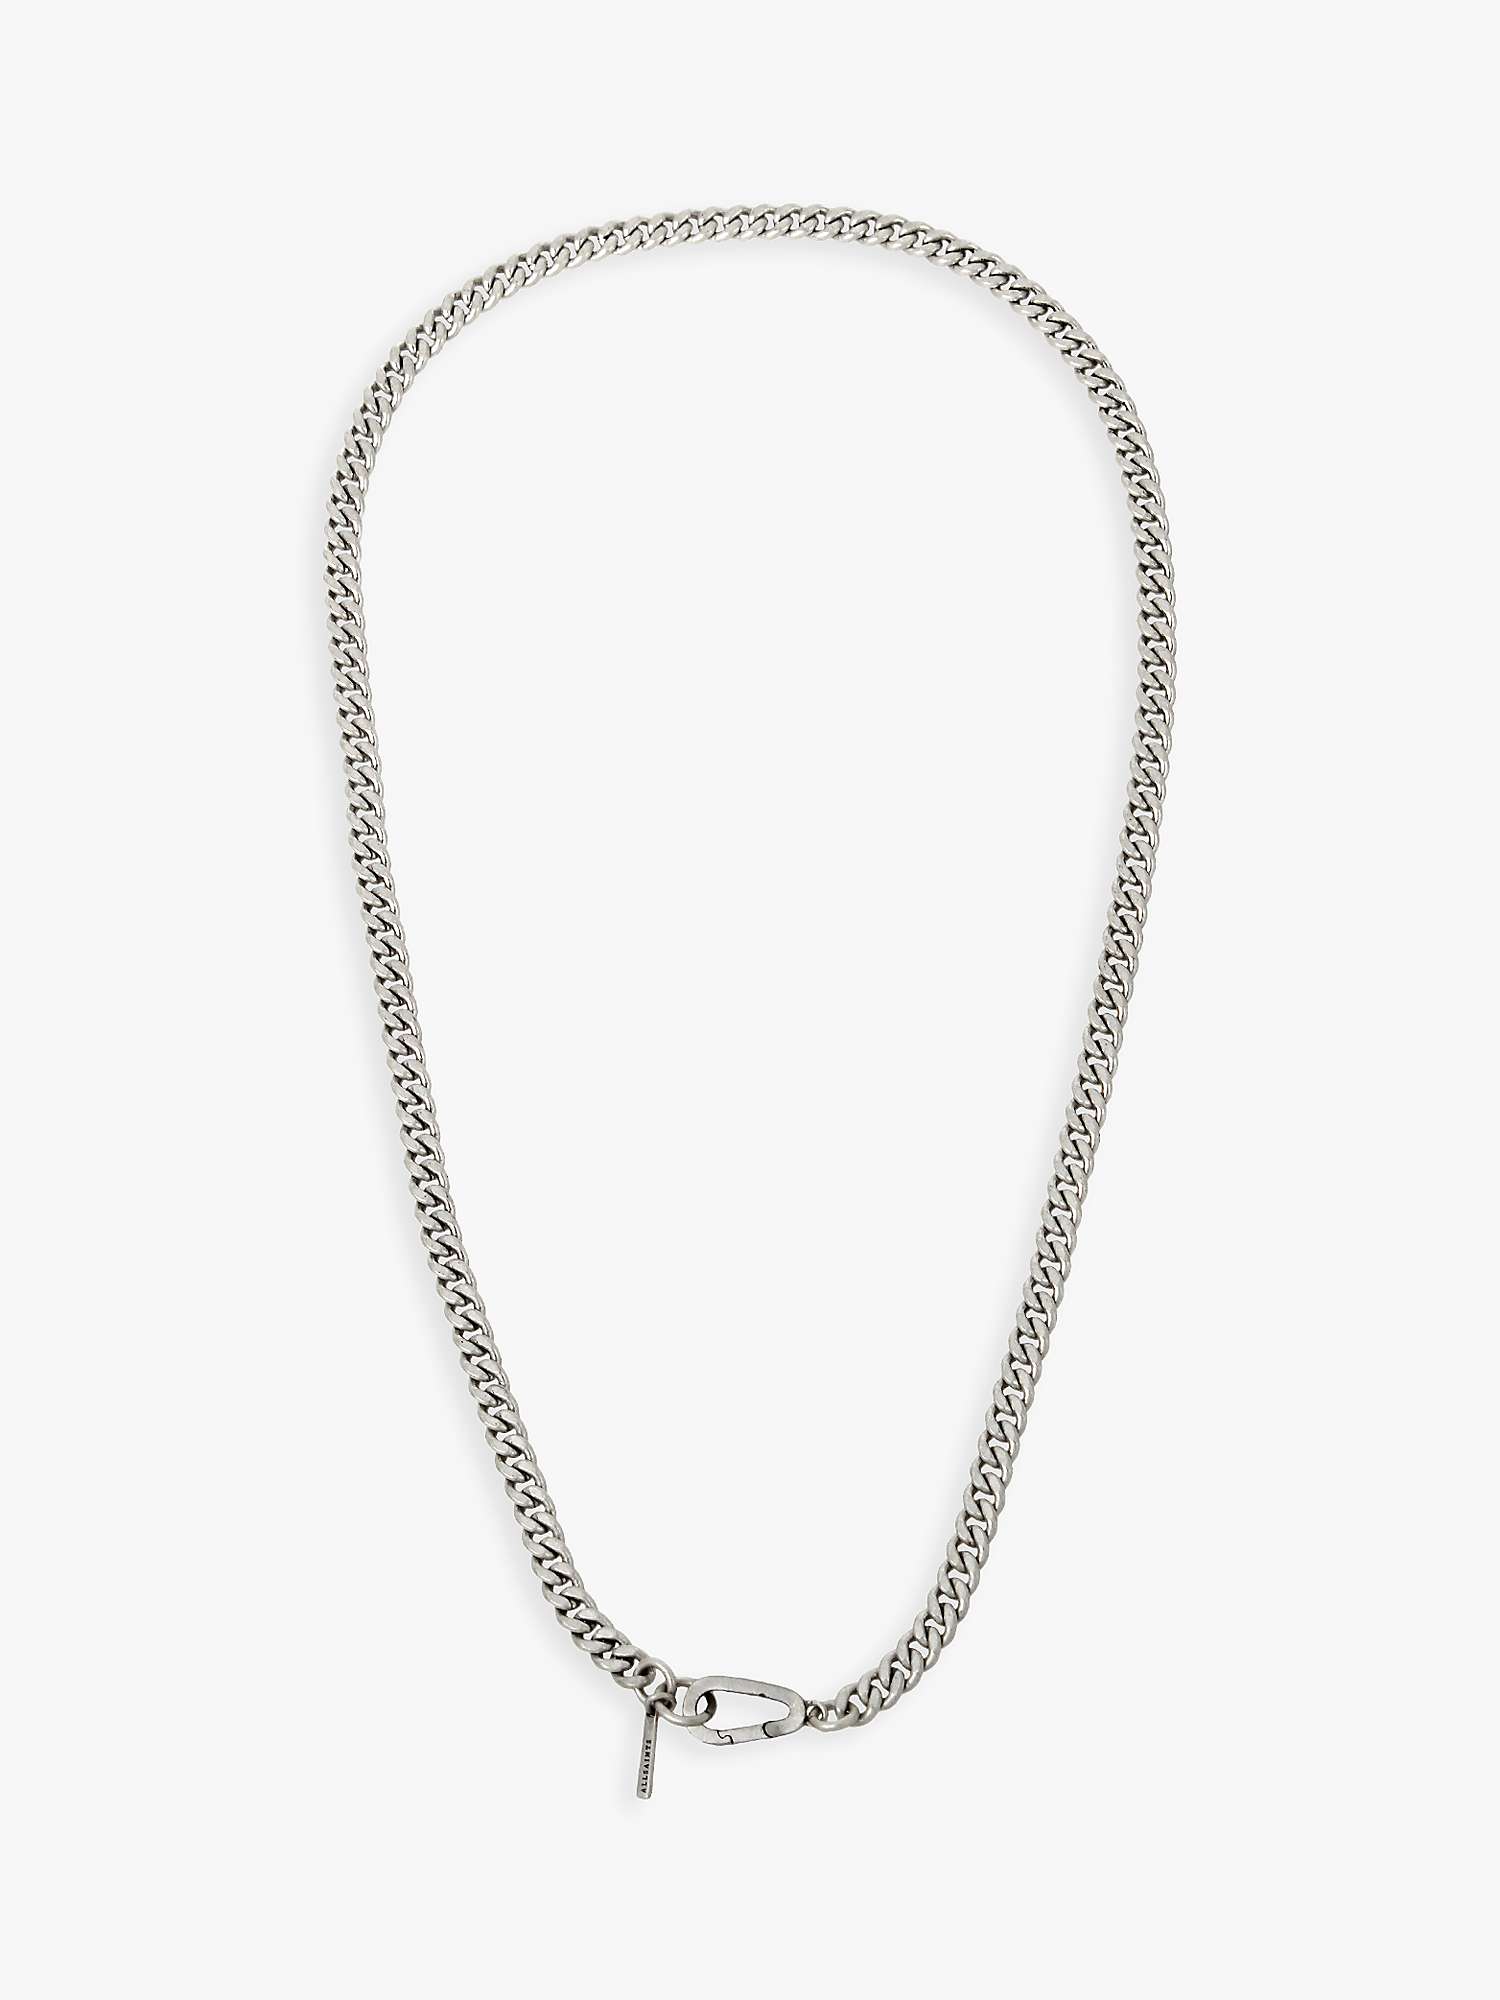 Buy AllSaints Men's Carabinar Chain Necklace, Silver Online at johnlewis.com